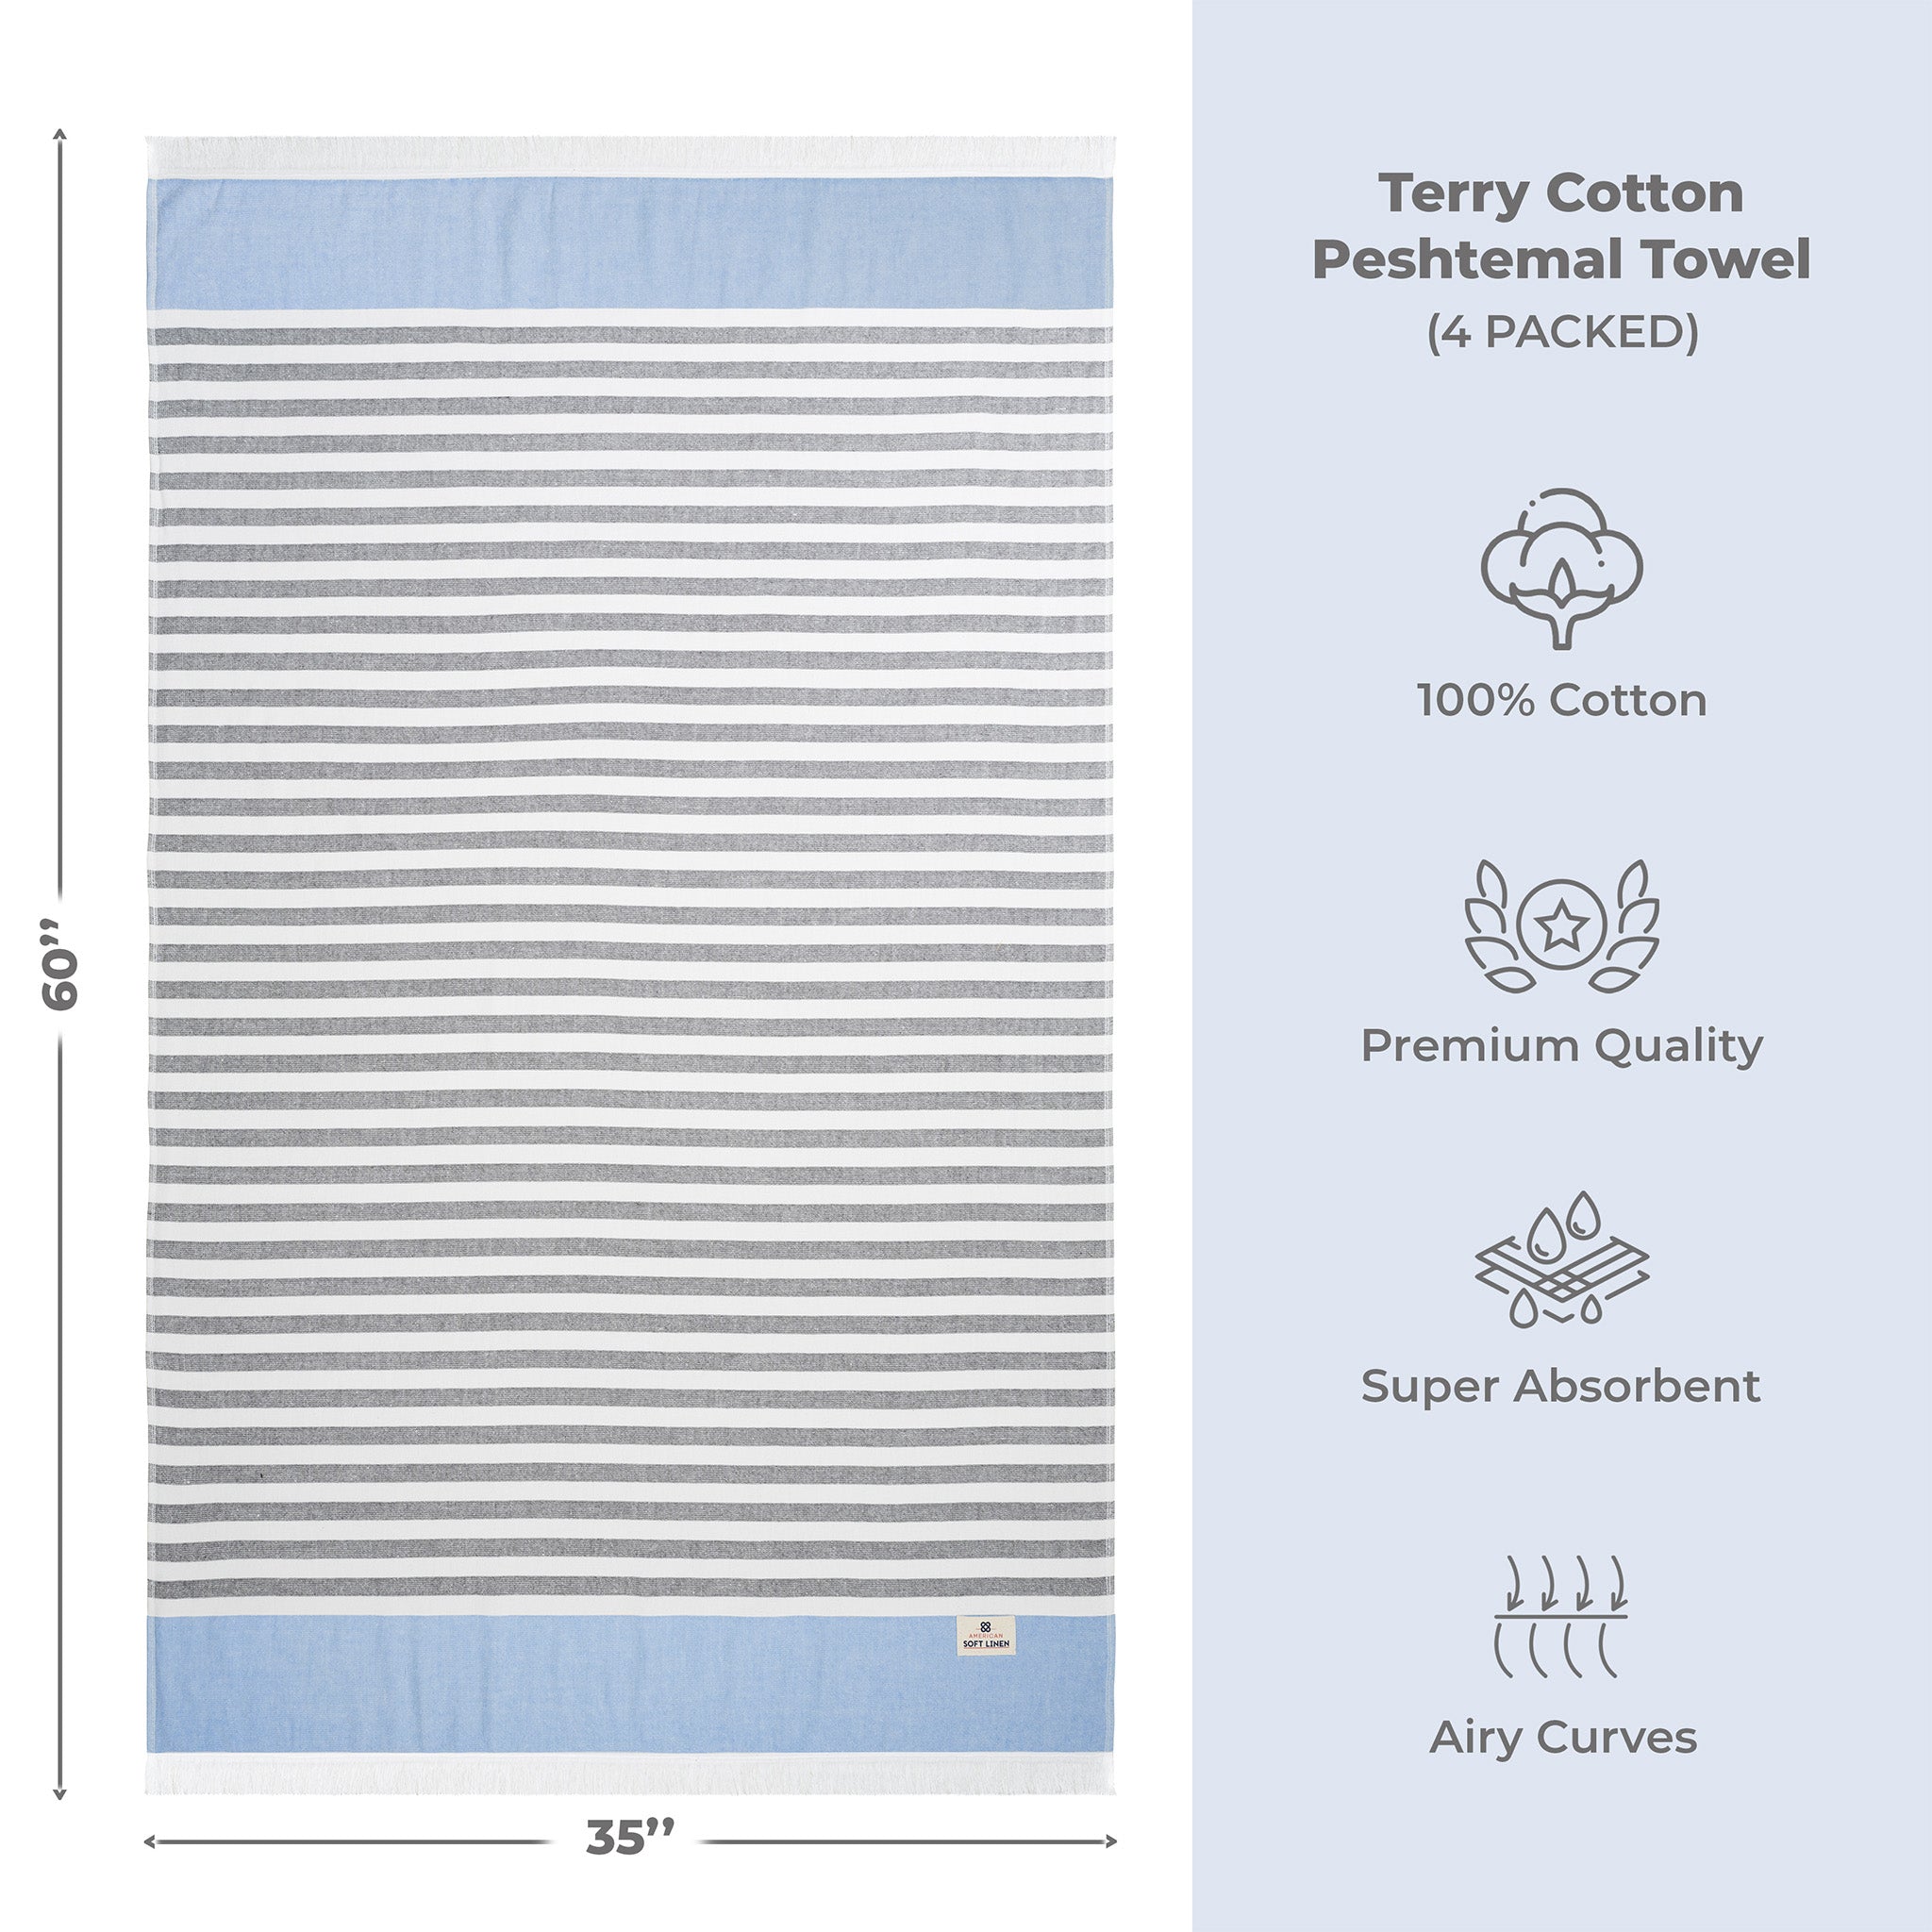 4 Packed 100% Cotton Terry Peshtemal & Beach Towel Navy Blue-03